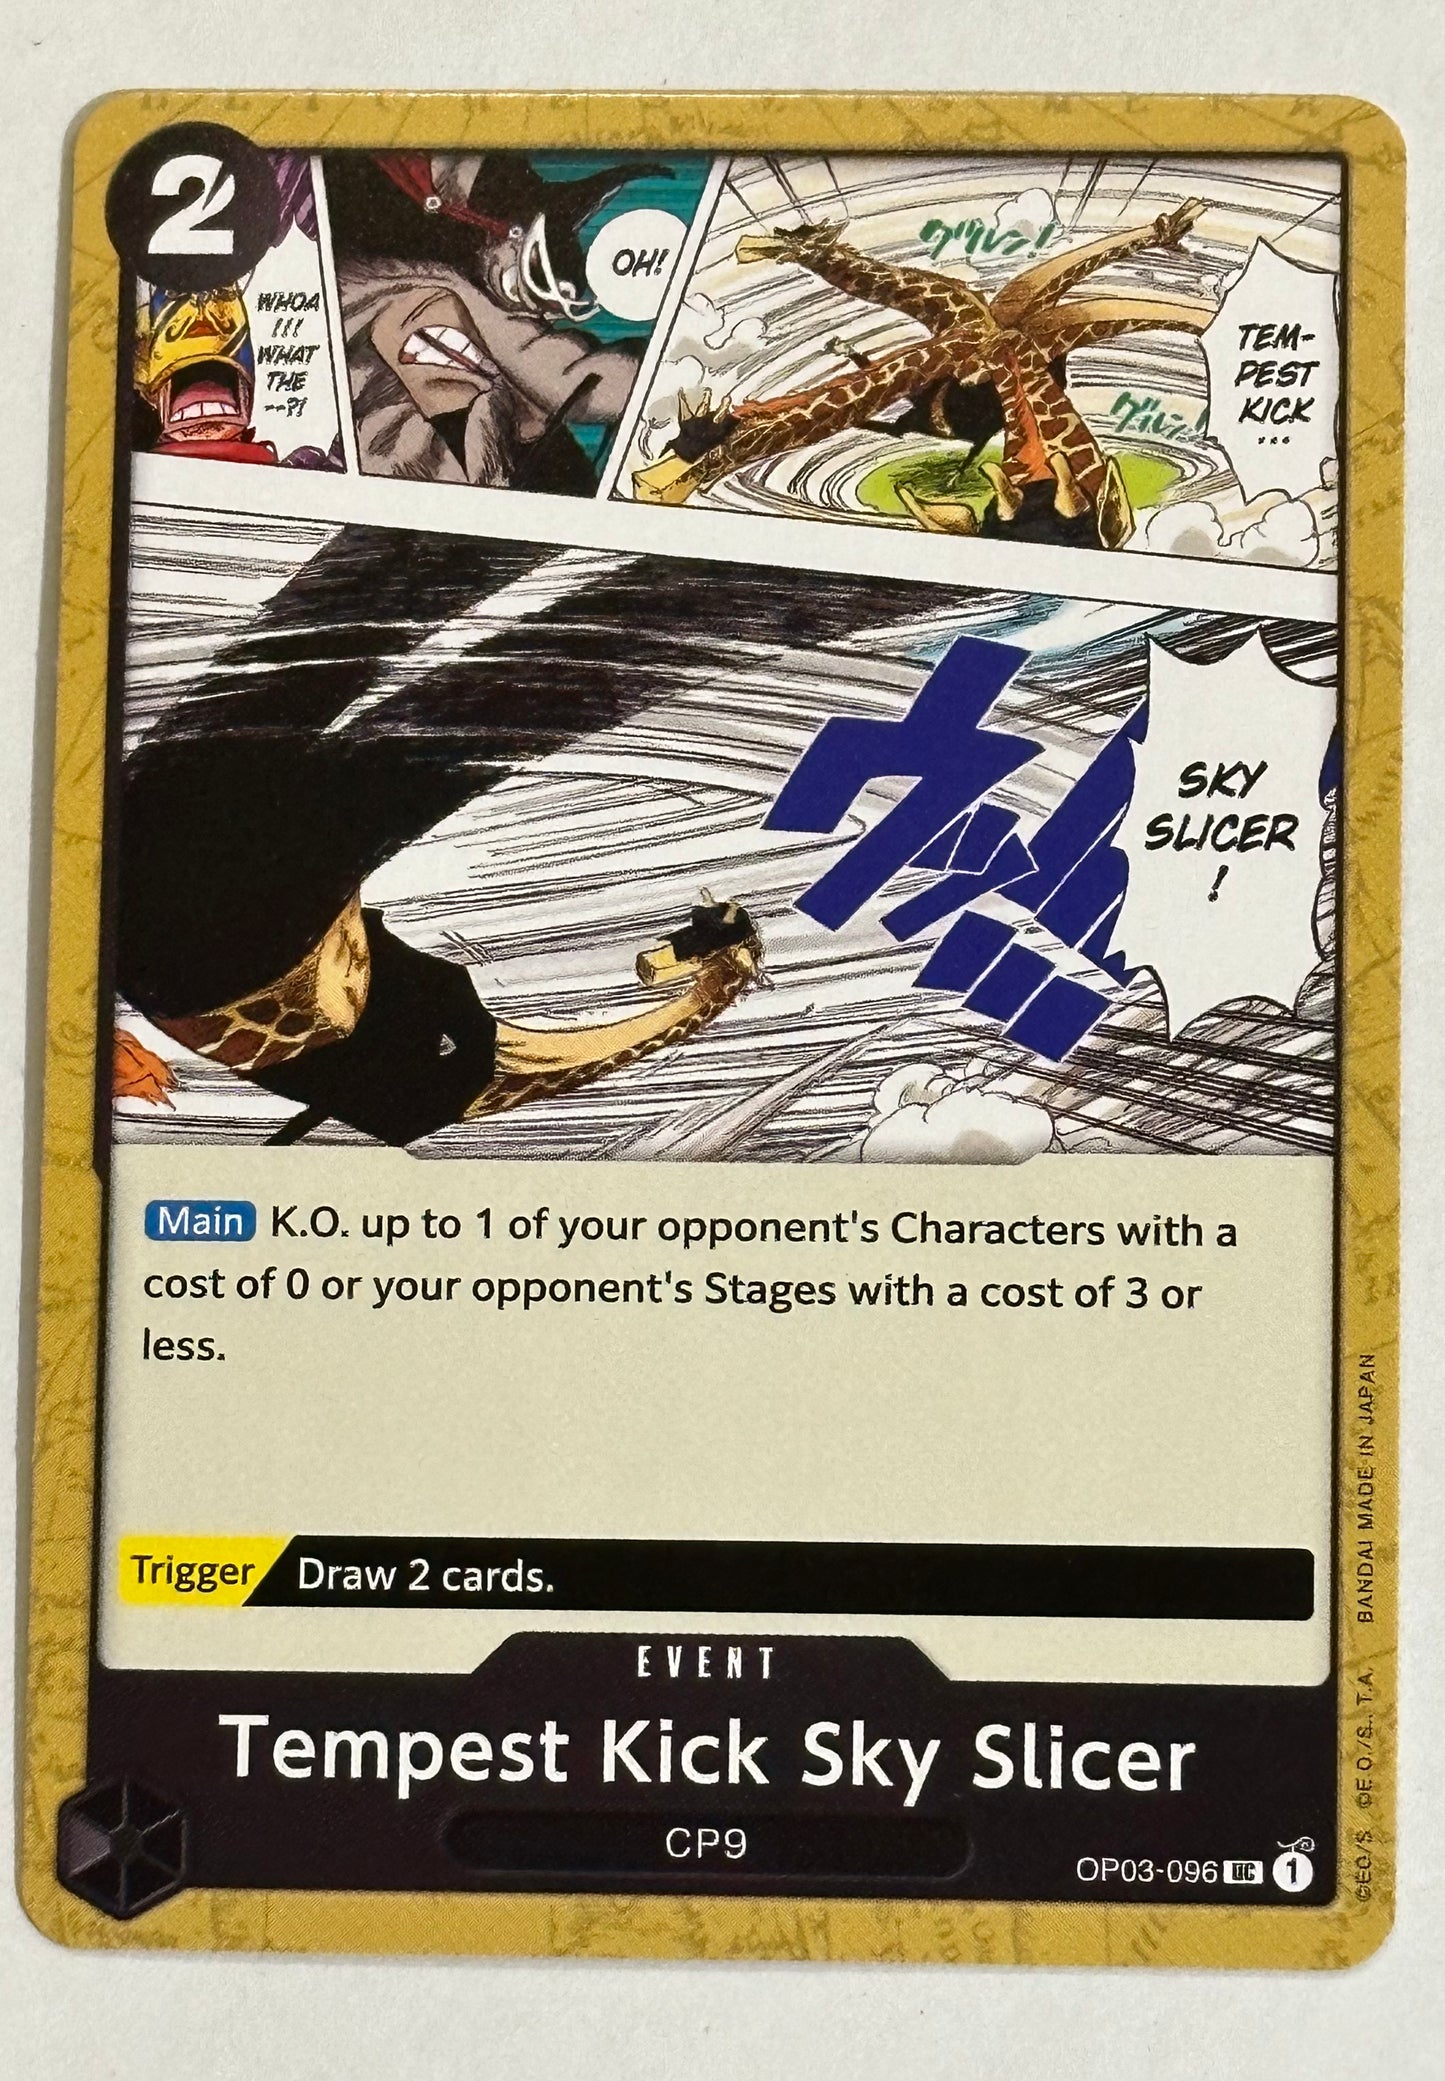 One Piece TCG Event Tempest Kick Sky Slicer OP03-096 Pillars of Strength English